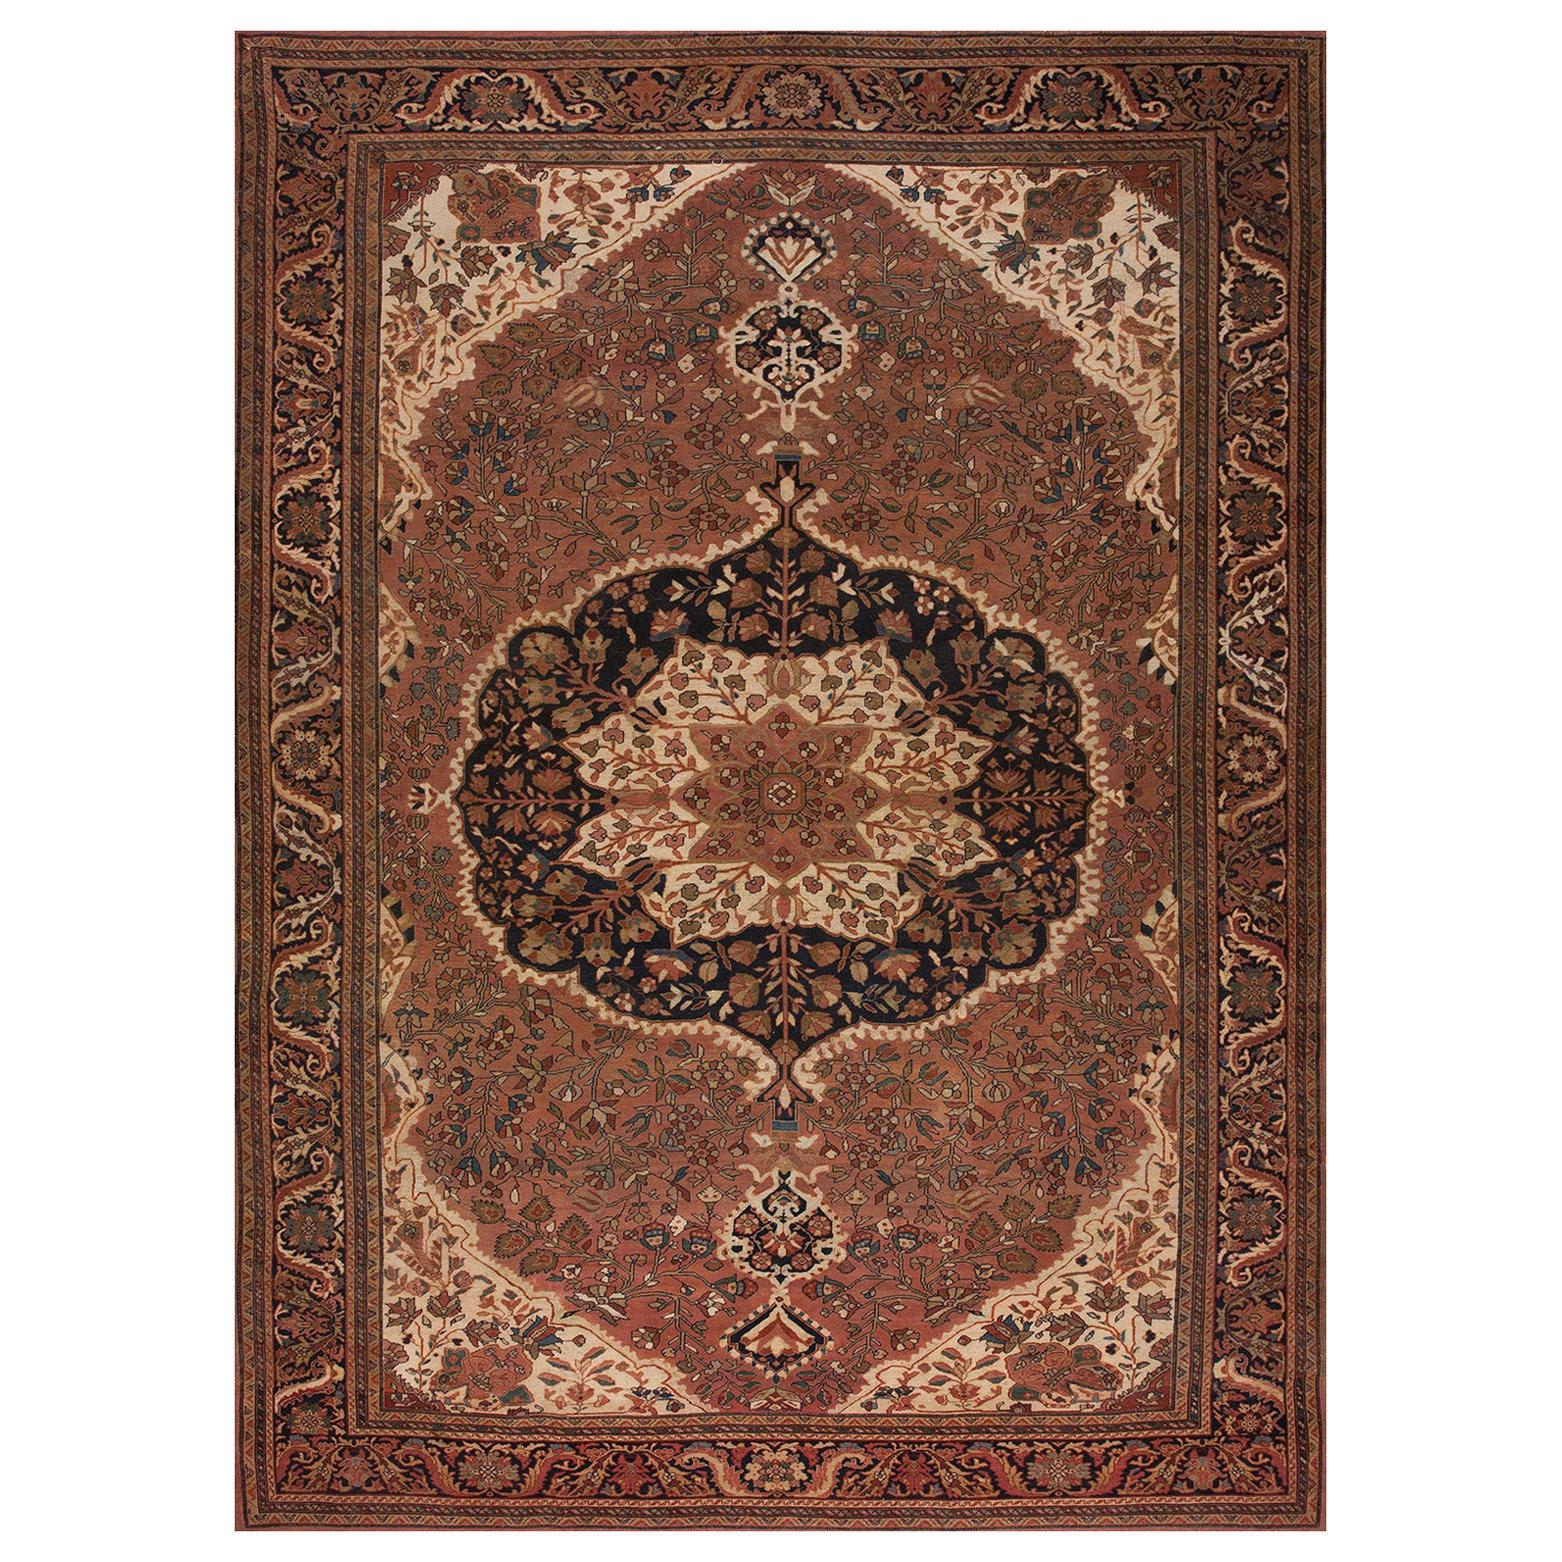 Early 20th Century Persian Sarouk Farahan Carpet ( 9'3" x 13'2" - 282 x 401 )